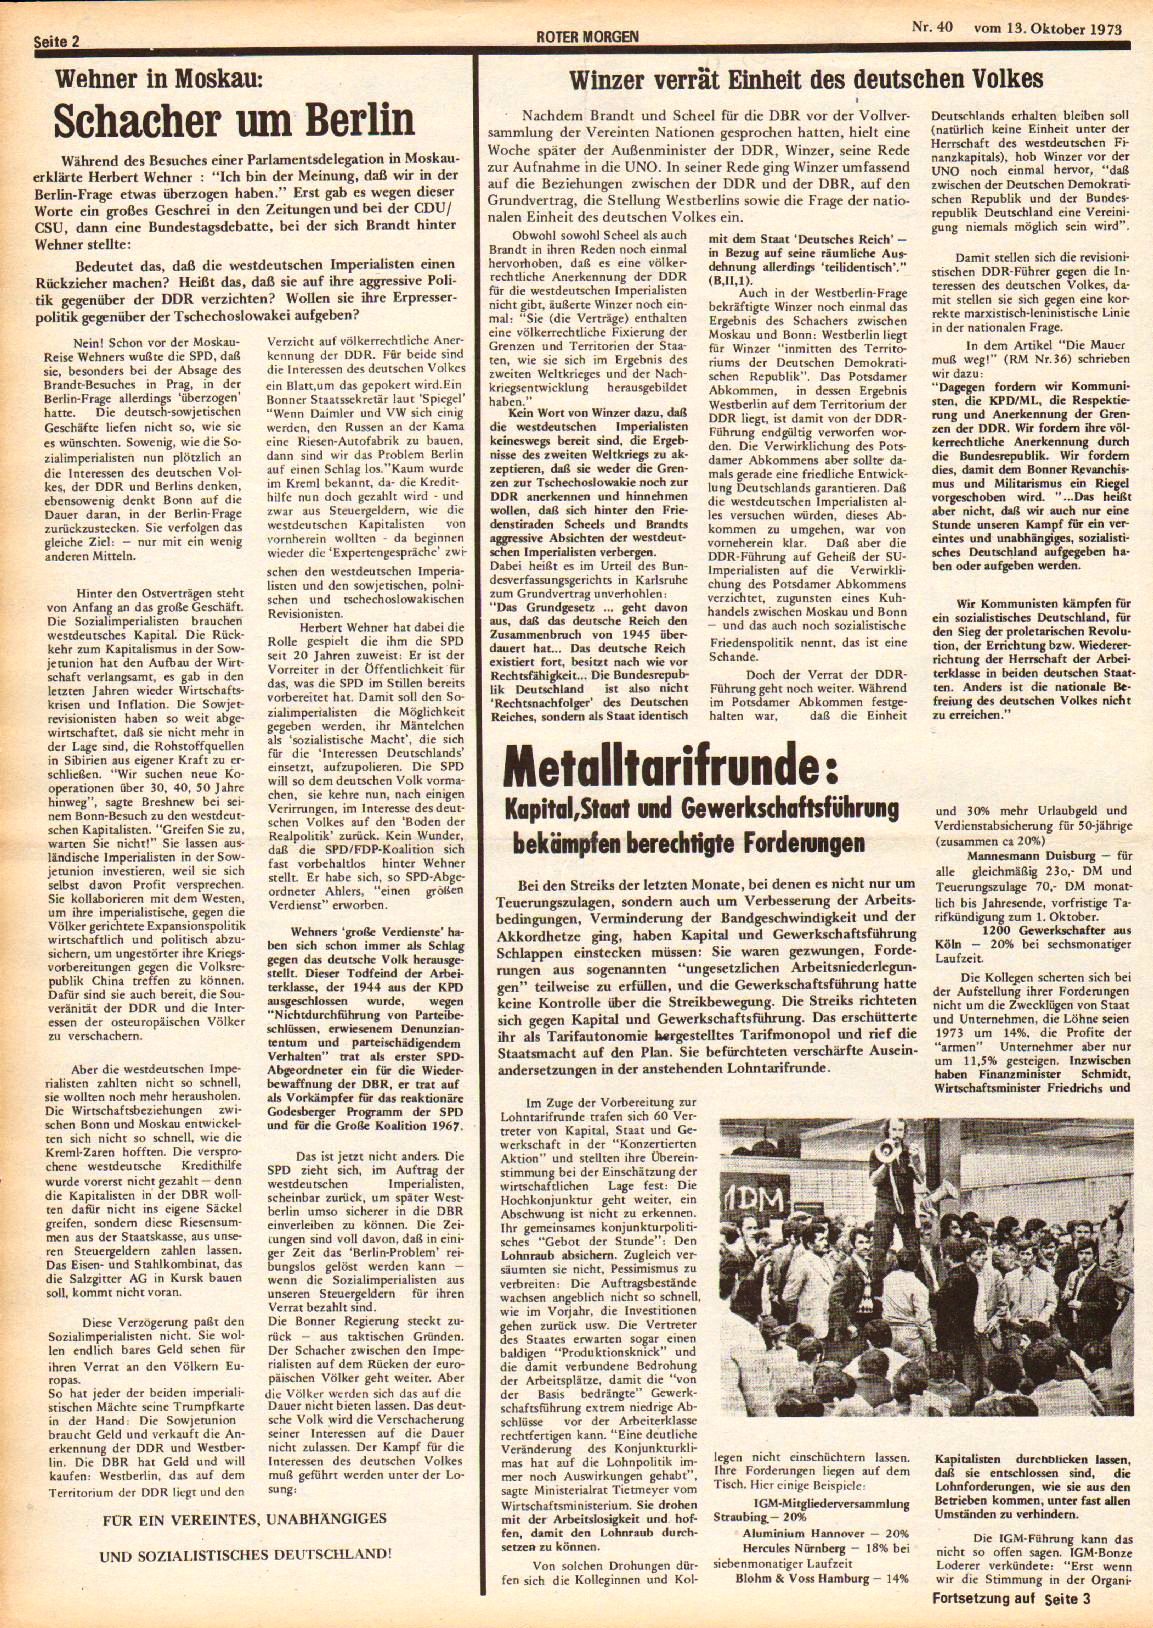 Roter Morgen, 7. Jg., 13. Oktober 1973, Nr. 40, Seite 2